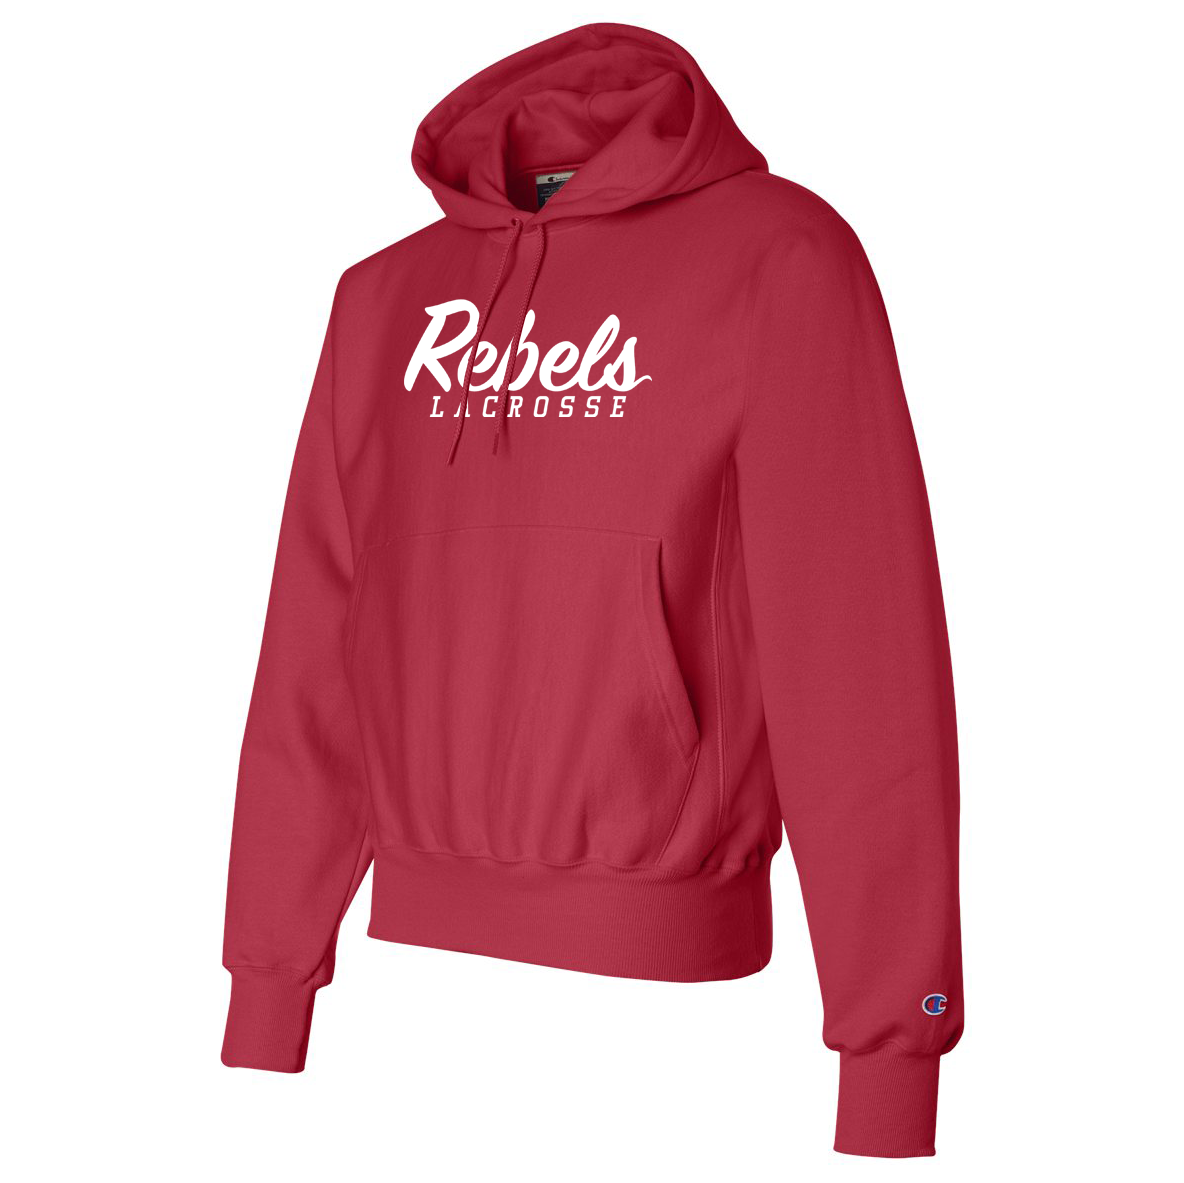 Rebels Lacrosse Champion Sweatshirt